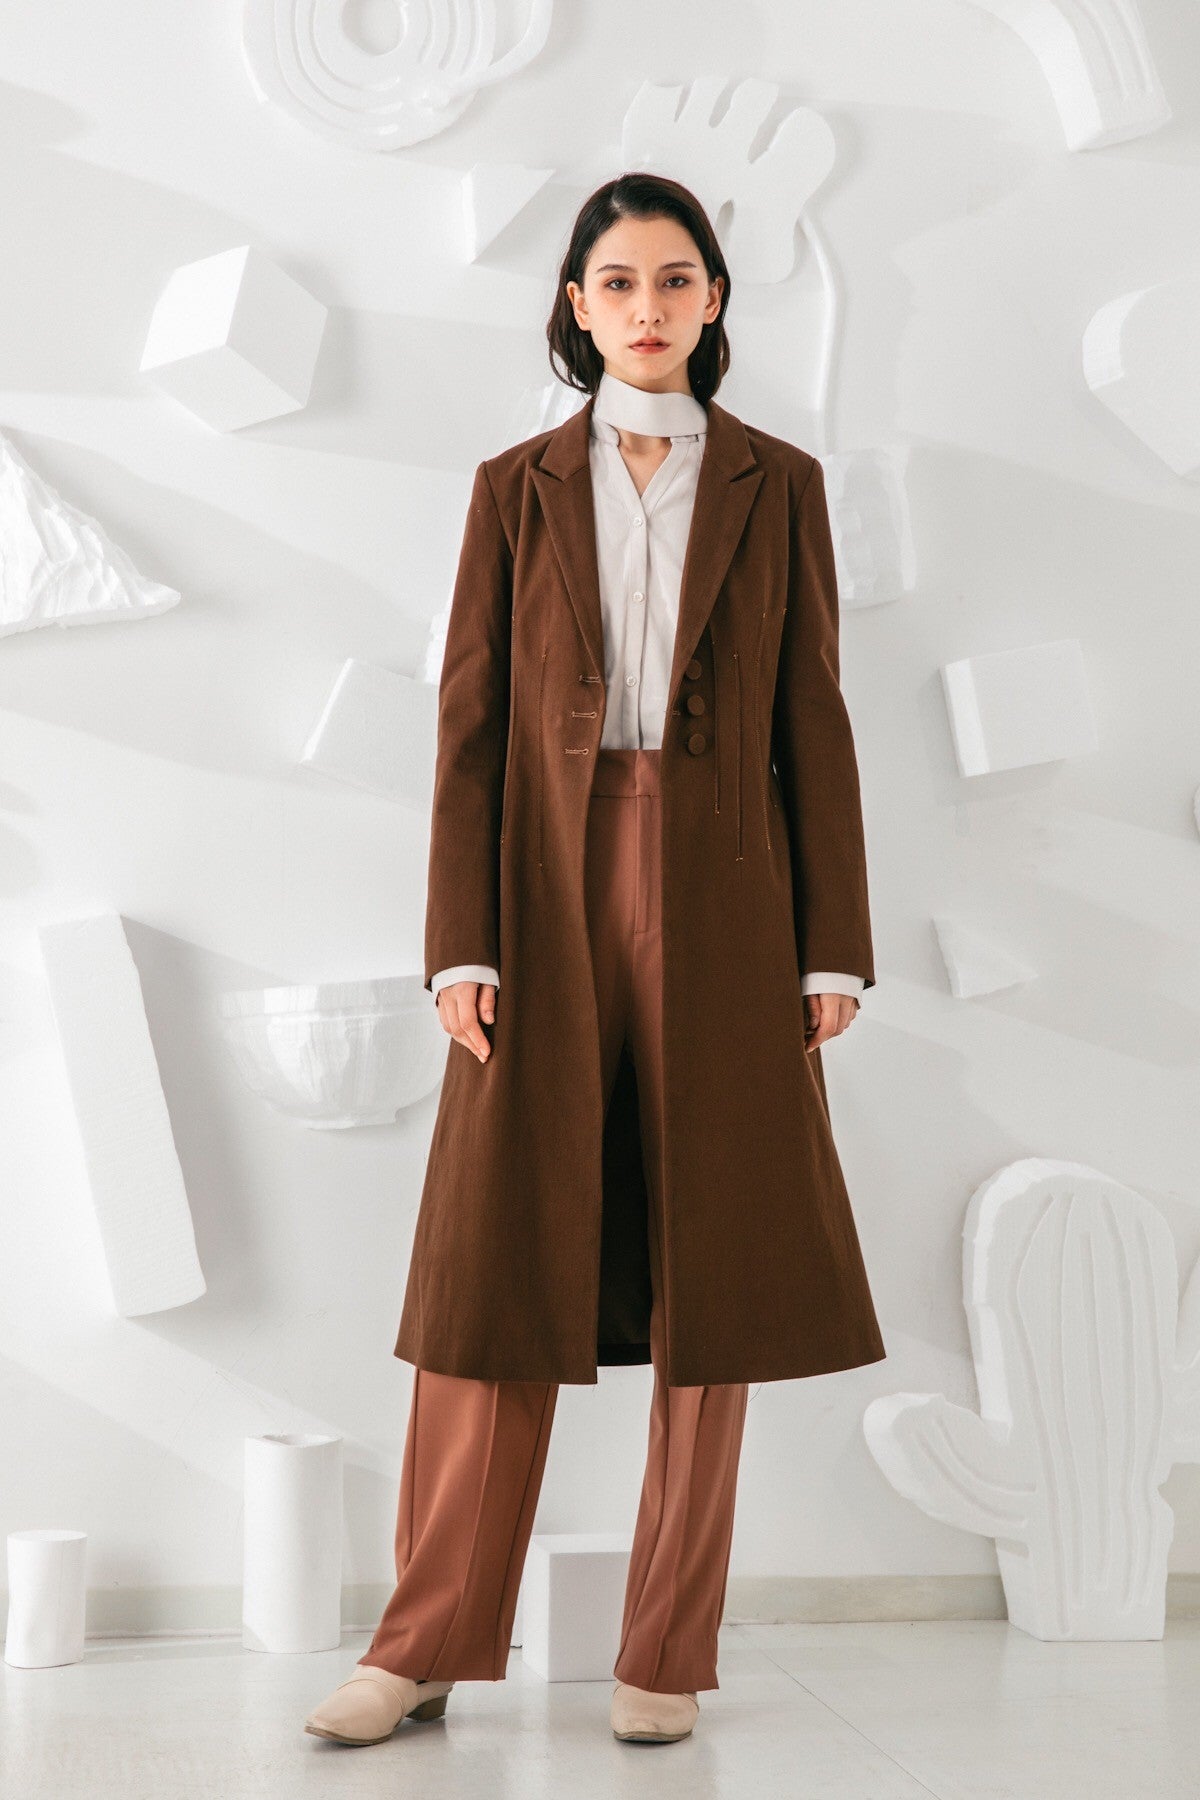 SKYE San Francisco SF shop ethical modern minimalist quality women clothing fashion Eléonore Blouse light grey 5